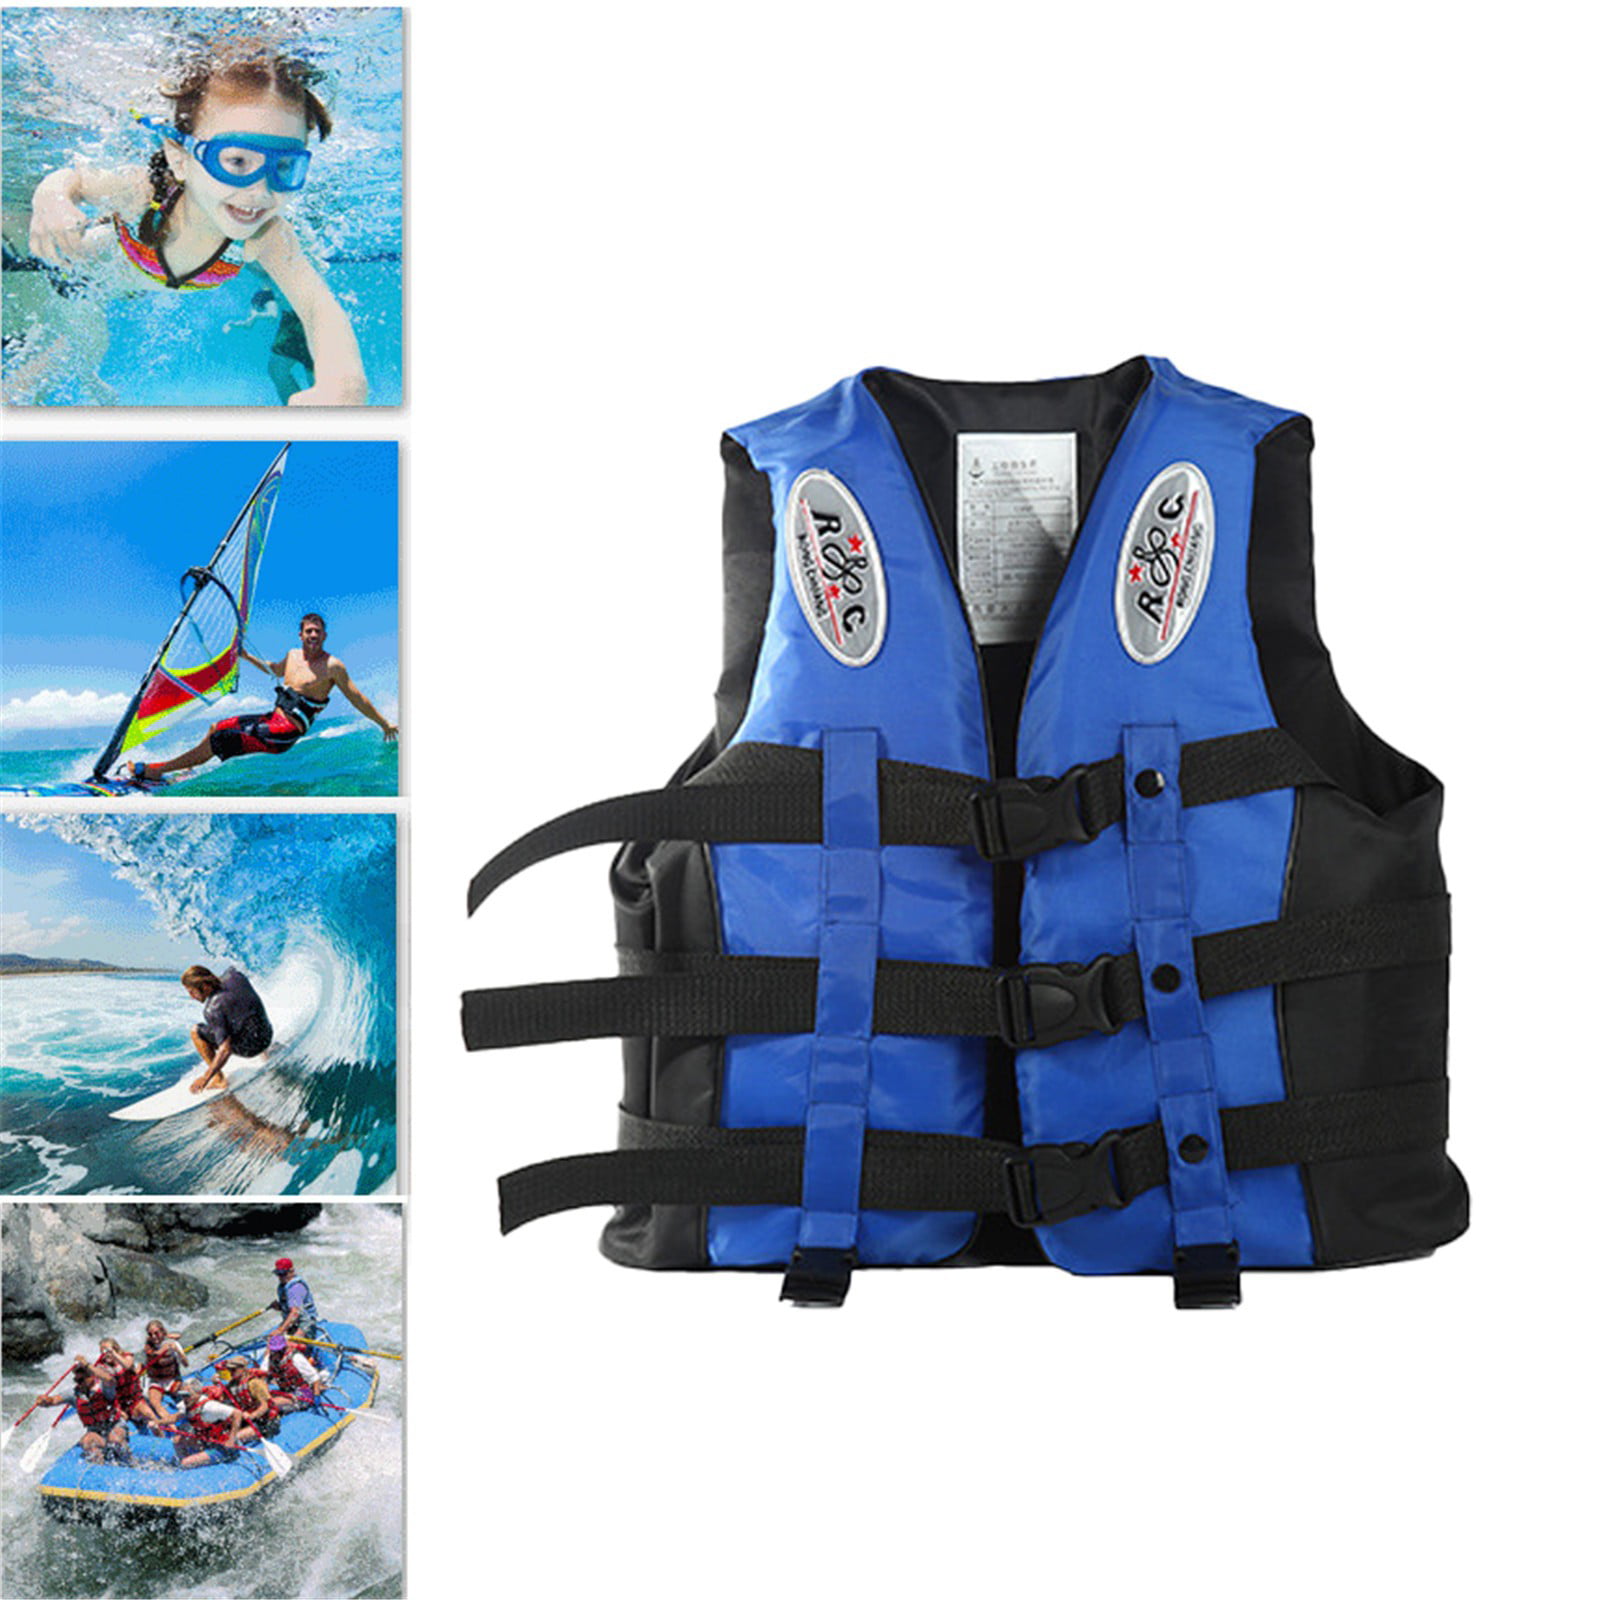 Adult Kid Life Jackets Vest Whistle Kayak Buoyancy Ski Aid Safe Swim Watersport 